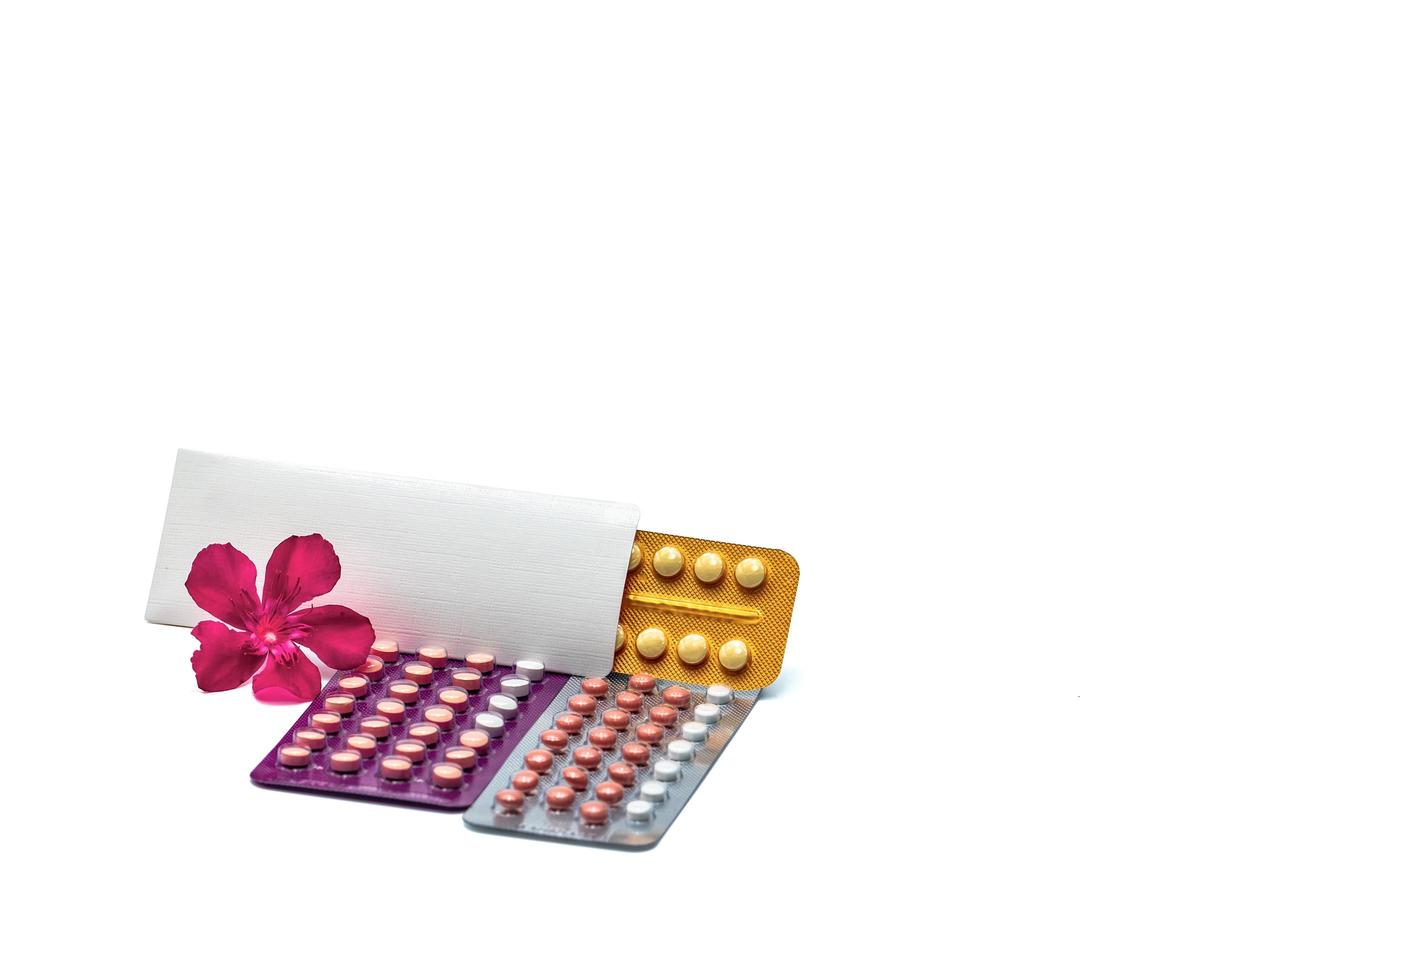 p-piller eller p-piller med rosa blomma på vit bakgrund med kopia utrymme. hormon för preventivmedel. familjeplaneringskoncept. runda hormontabletter i blisterförpackning. foto